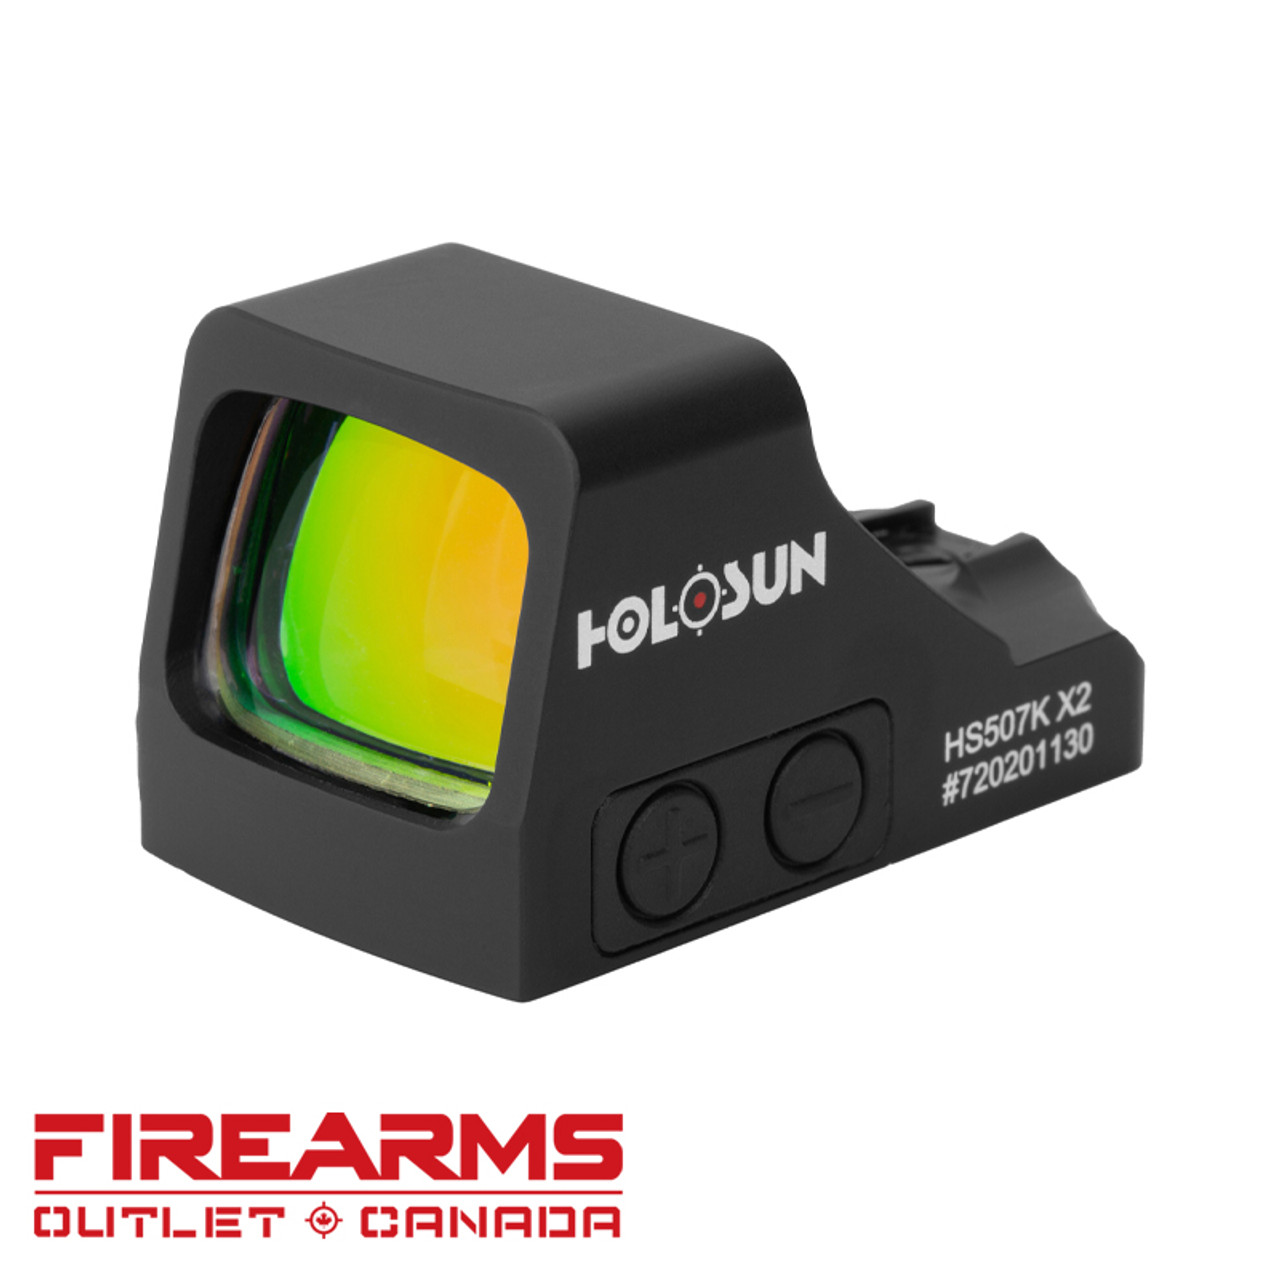 Holosun HS507K X2 Pistol Red Dot Sight - Red 2 MOA Dot w/ 32 MOA Circle [HS507K-X2]